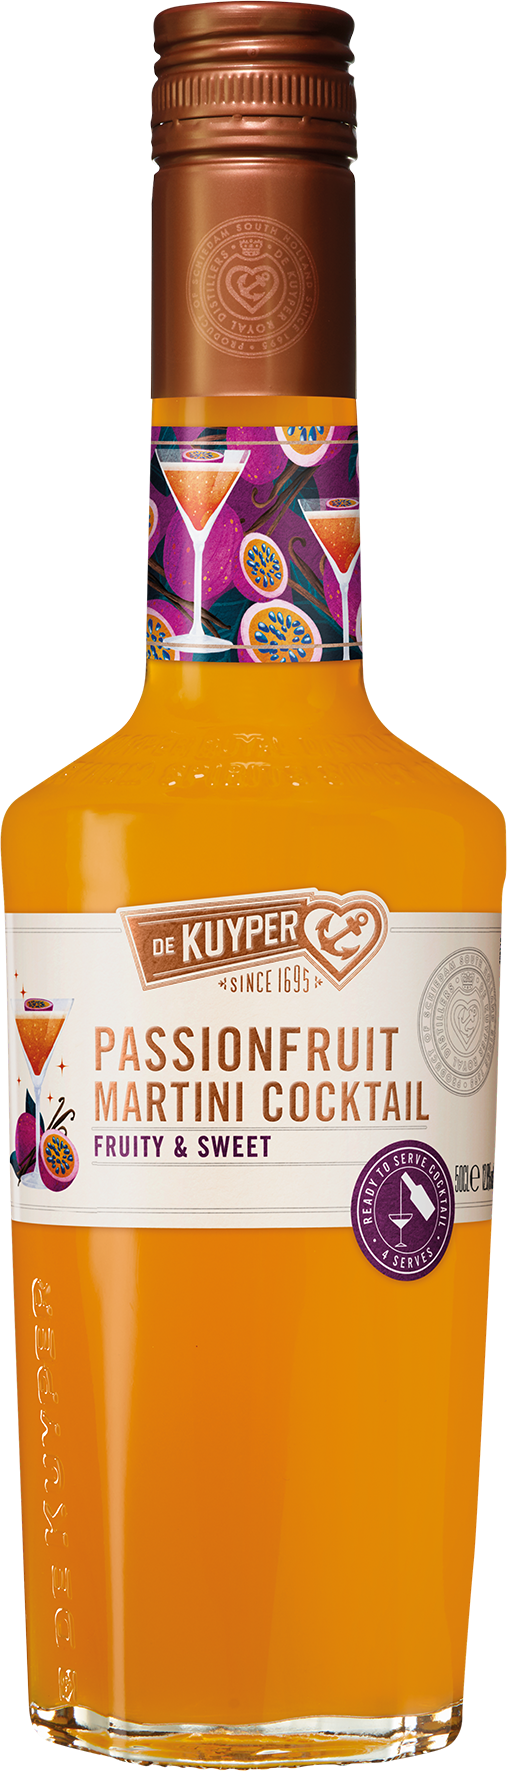 Passionfruit Martini / Pornstar Martini Cocktail - Ready to Serve